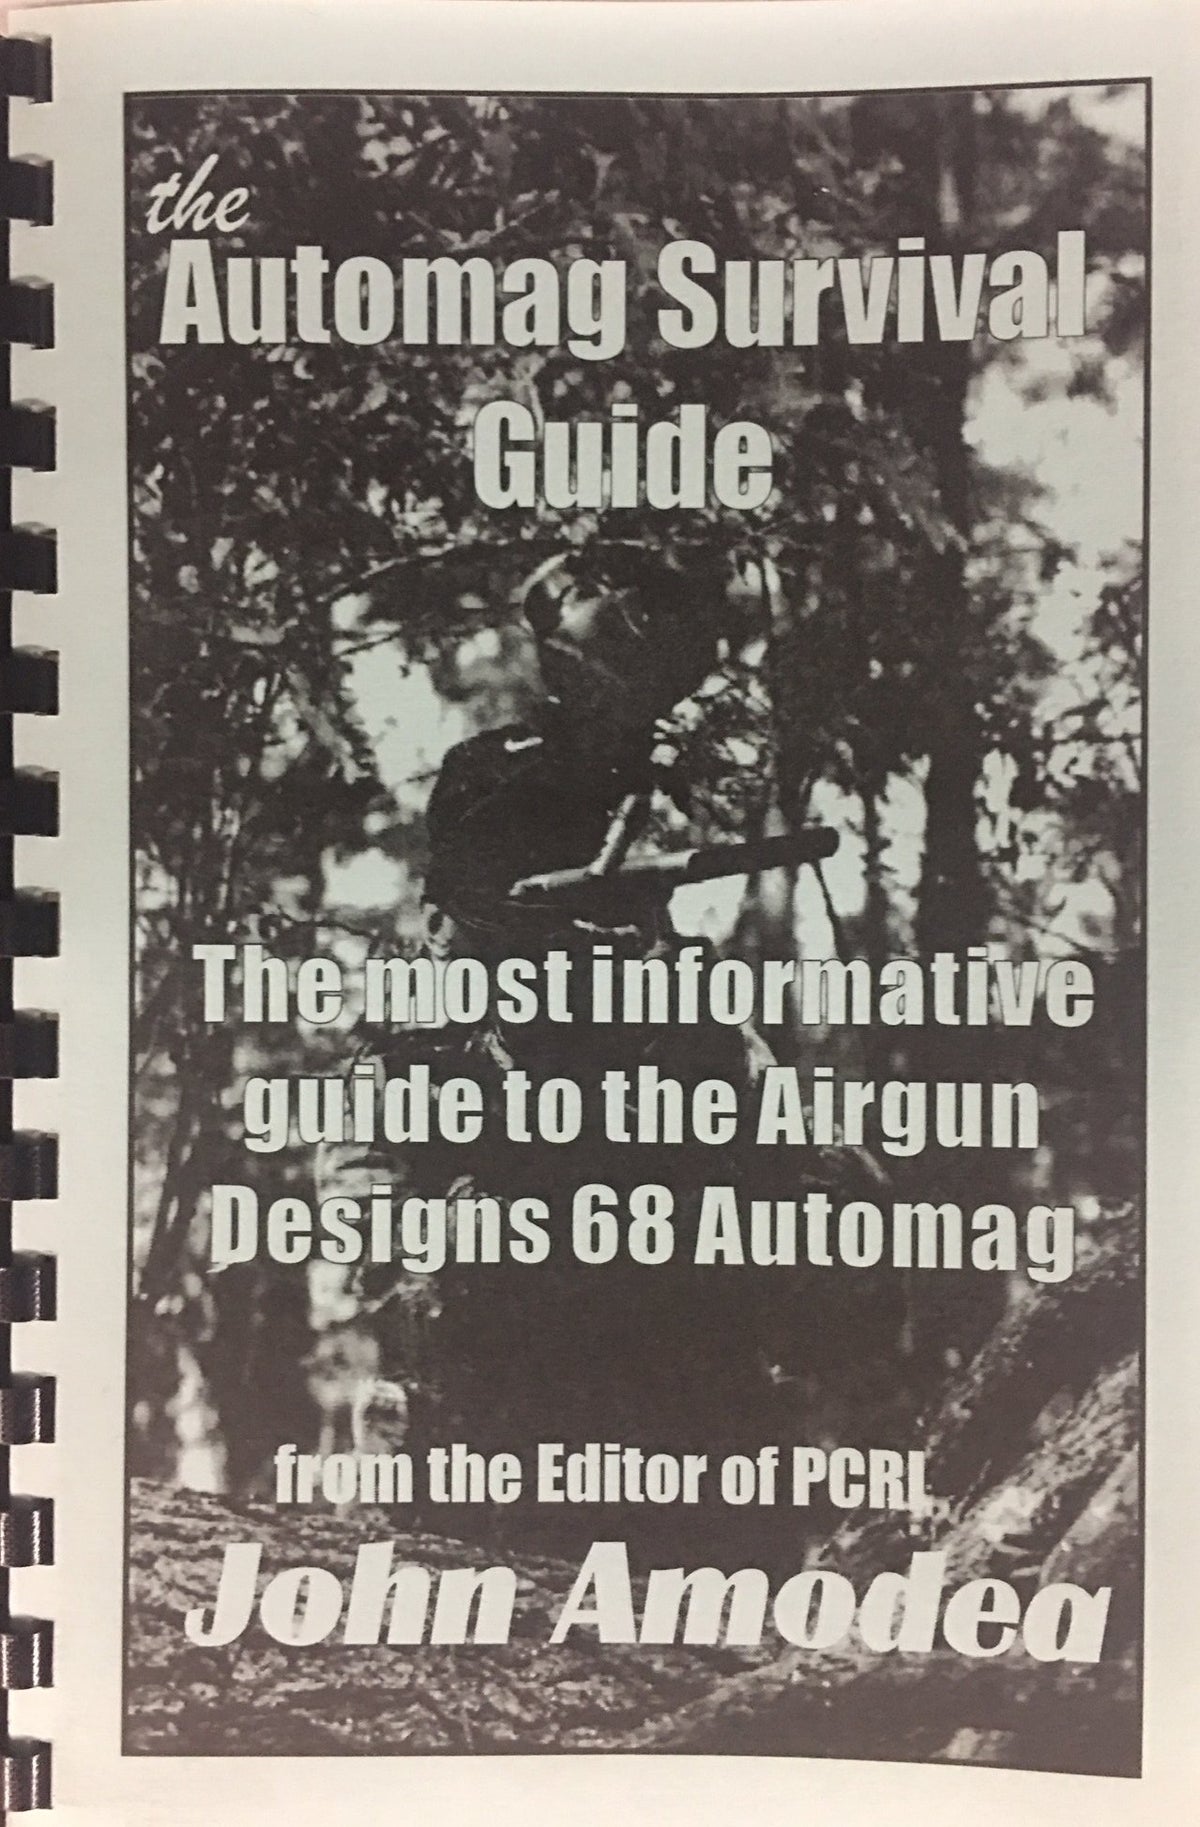 PCRI AGD Airgun Design Automag Paintball Survival Guide Technical Manual book